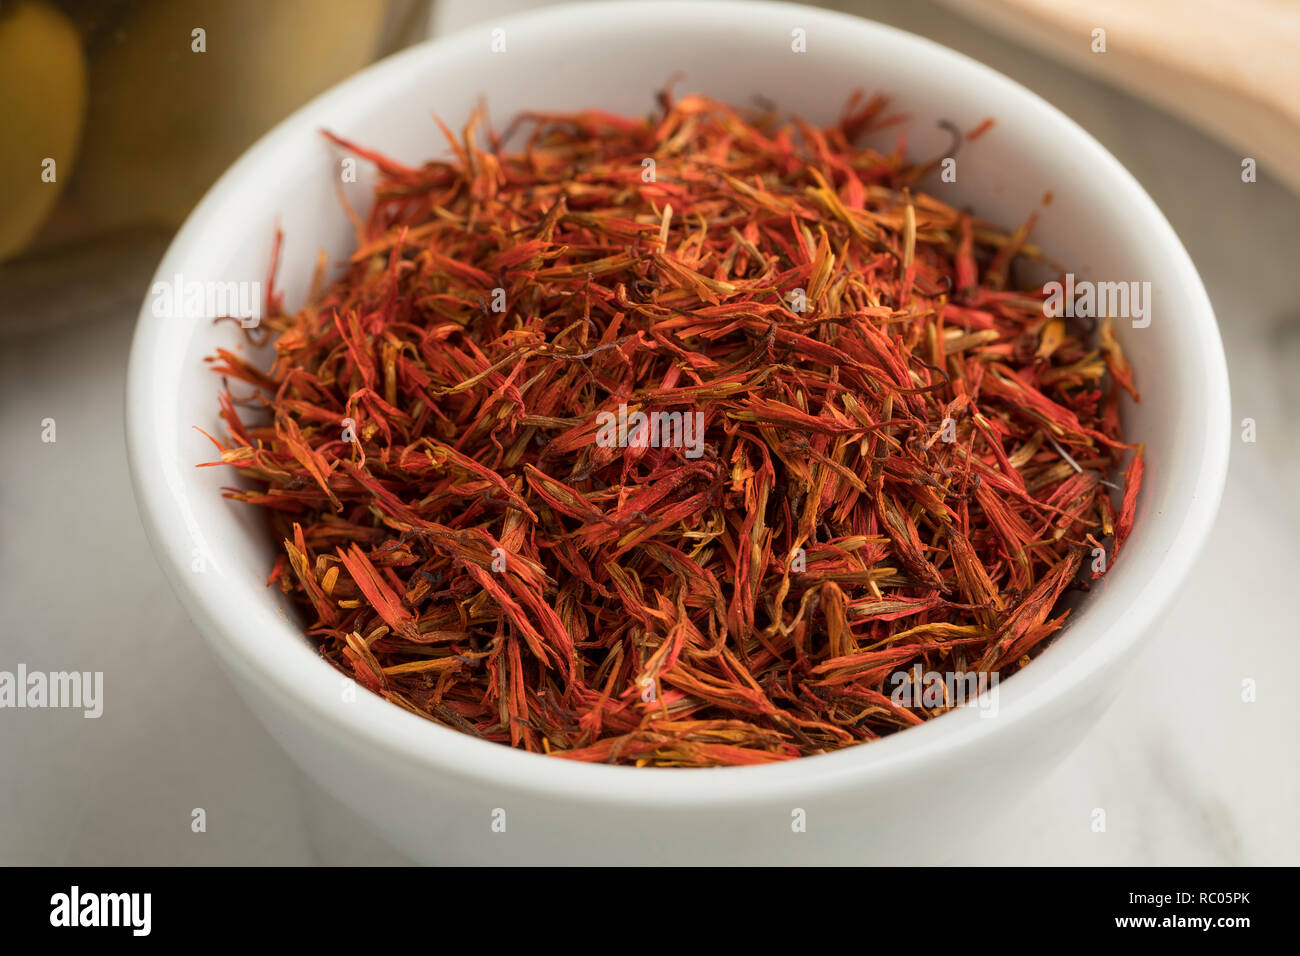 Bowl with dried orange saffron threads close up Stock Photo